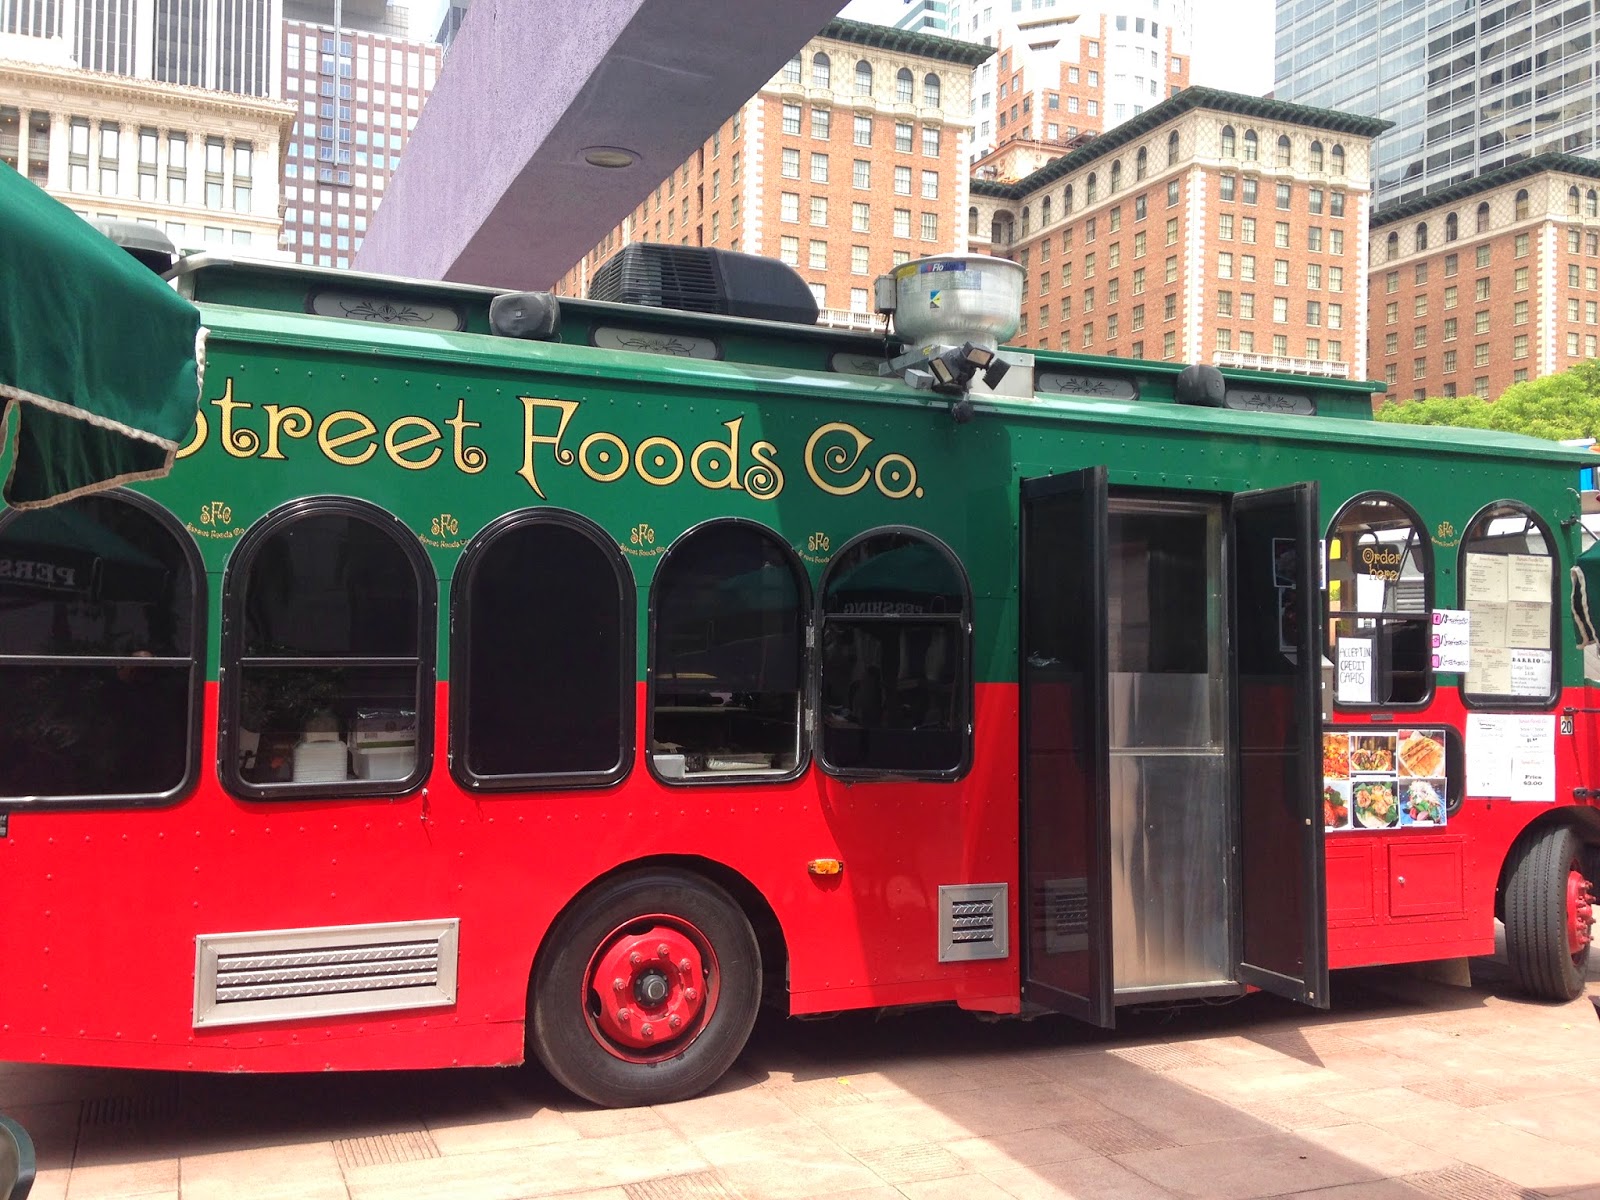 Image result for street foods co. food truck images